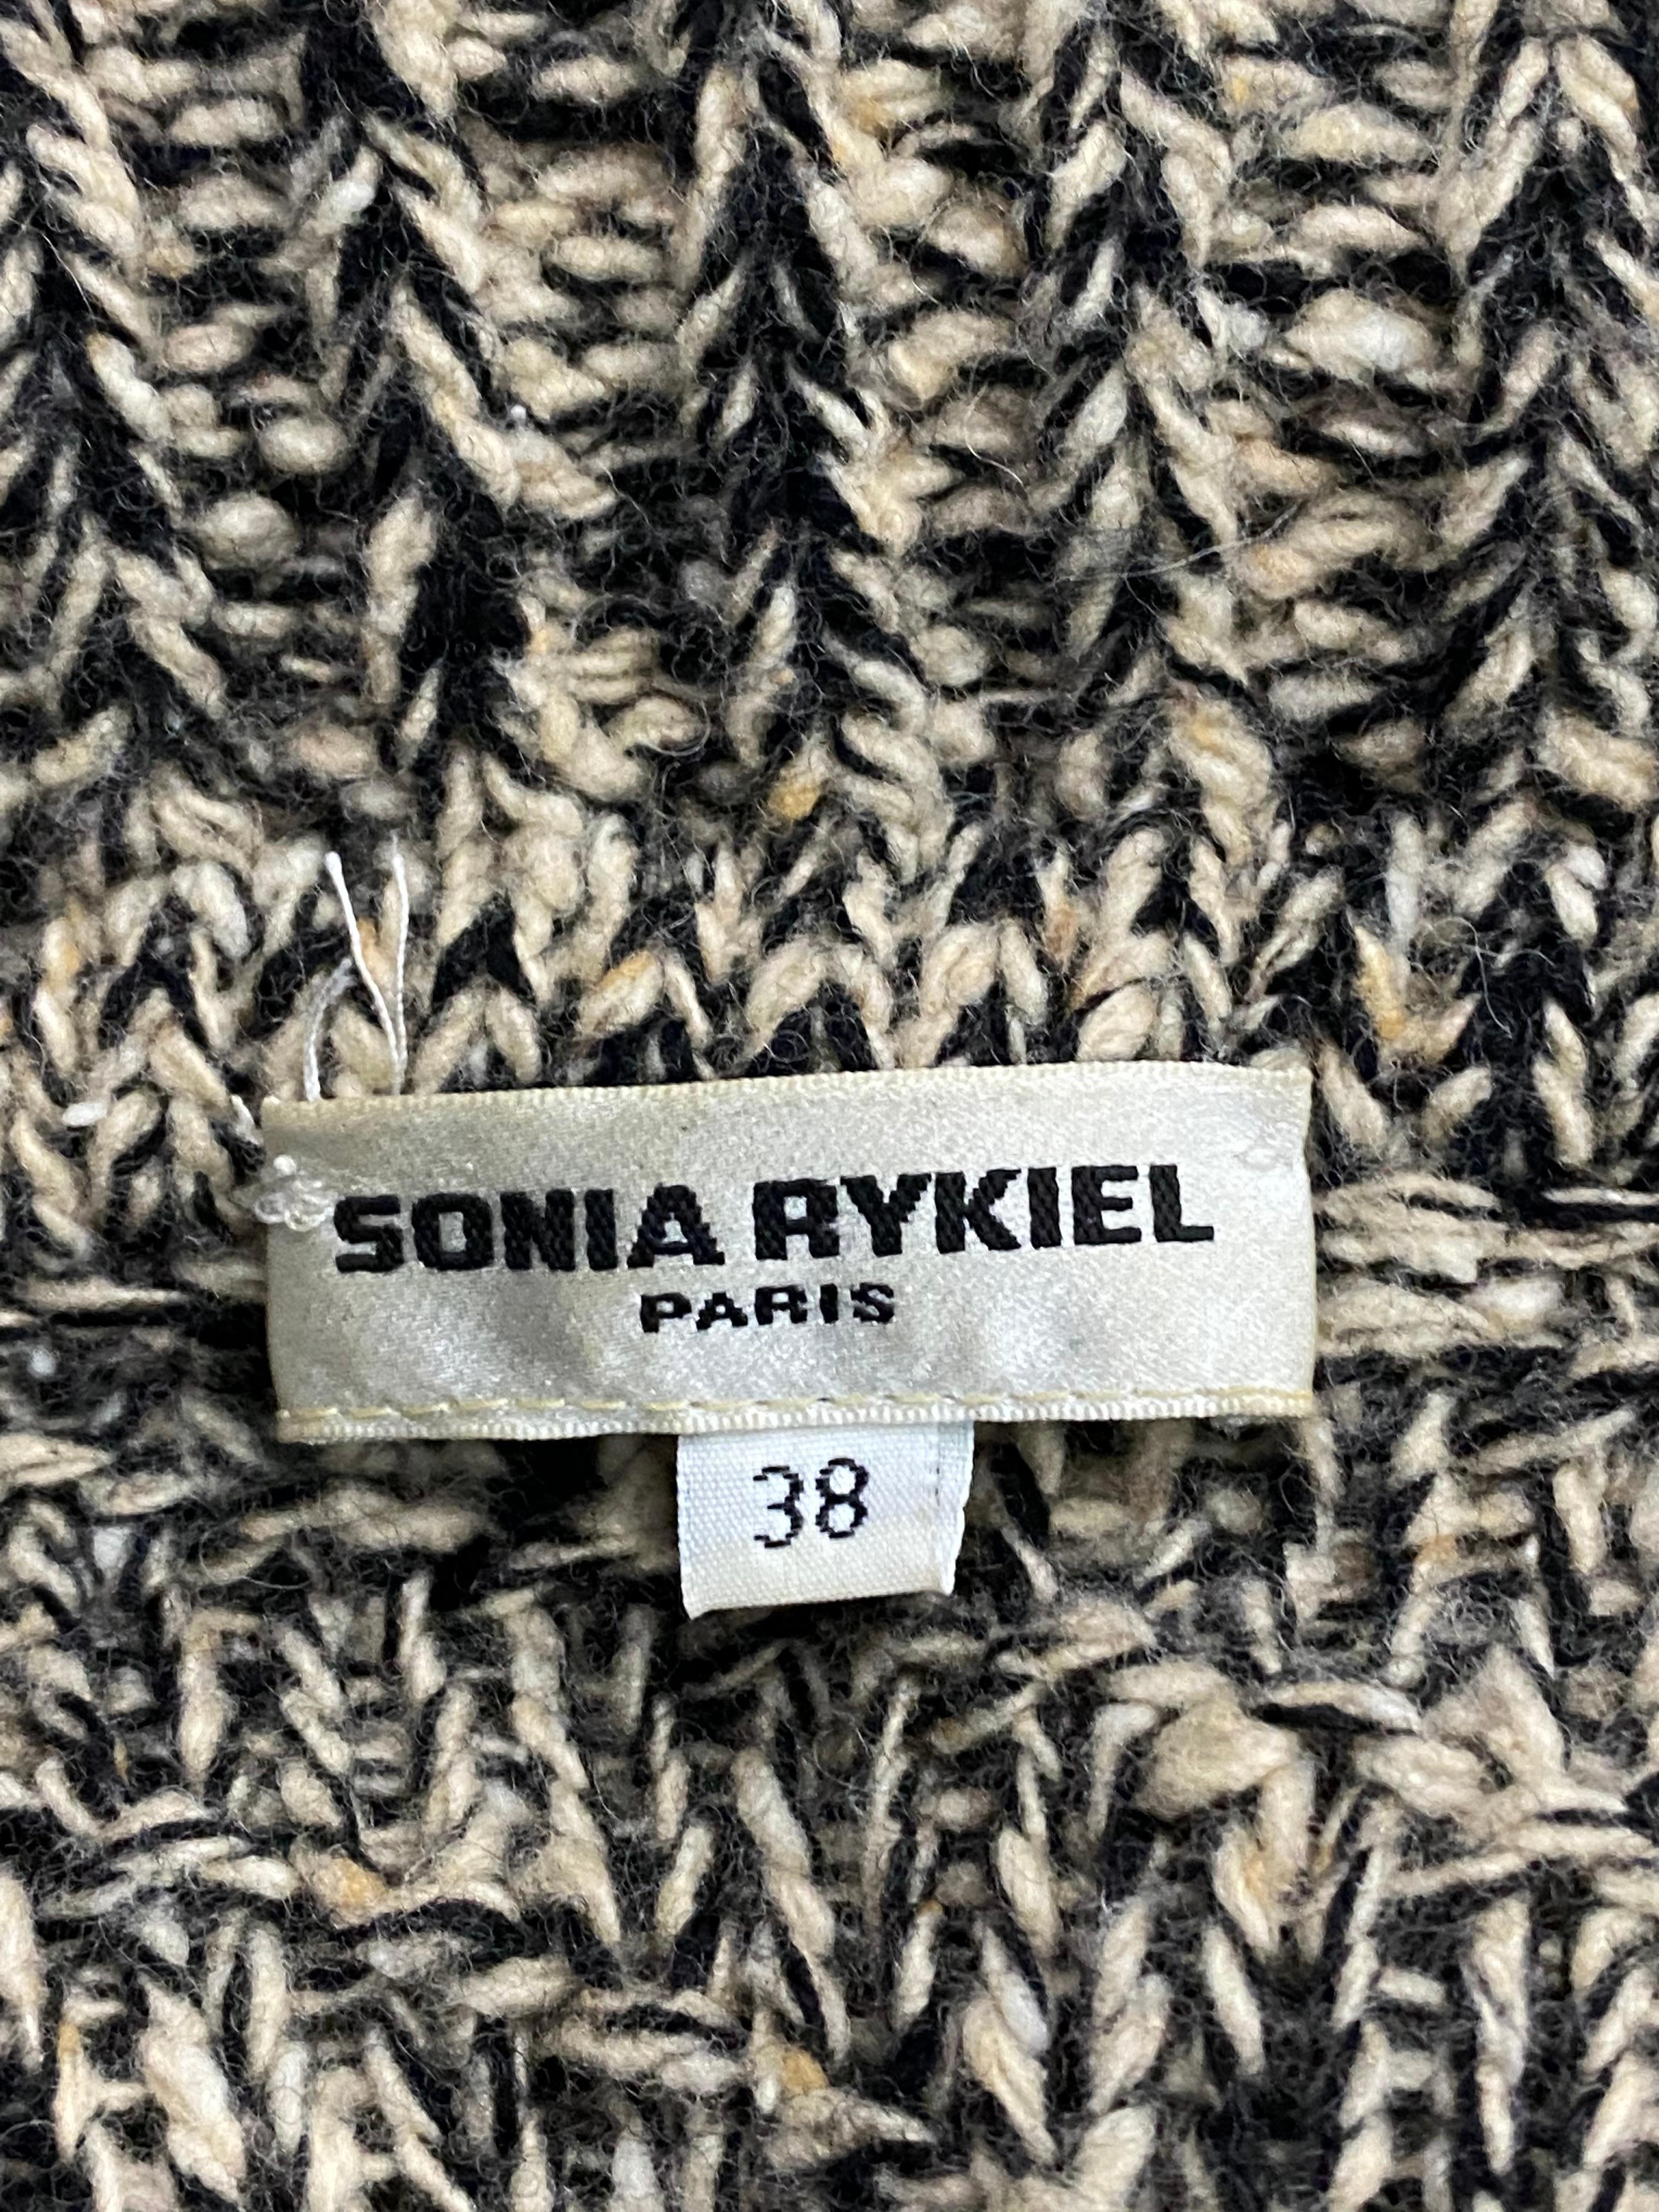 Sonia Rykiel Paris Brown and Black Knit Sweater Cardigan and Pants Set 8